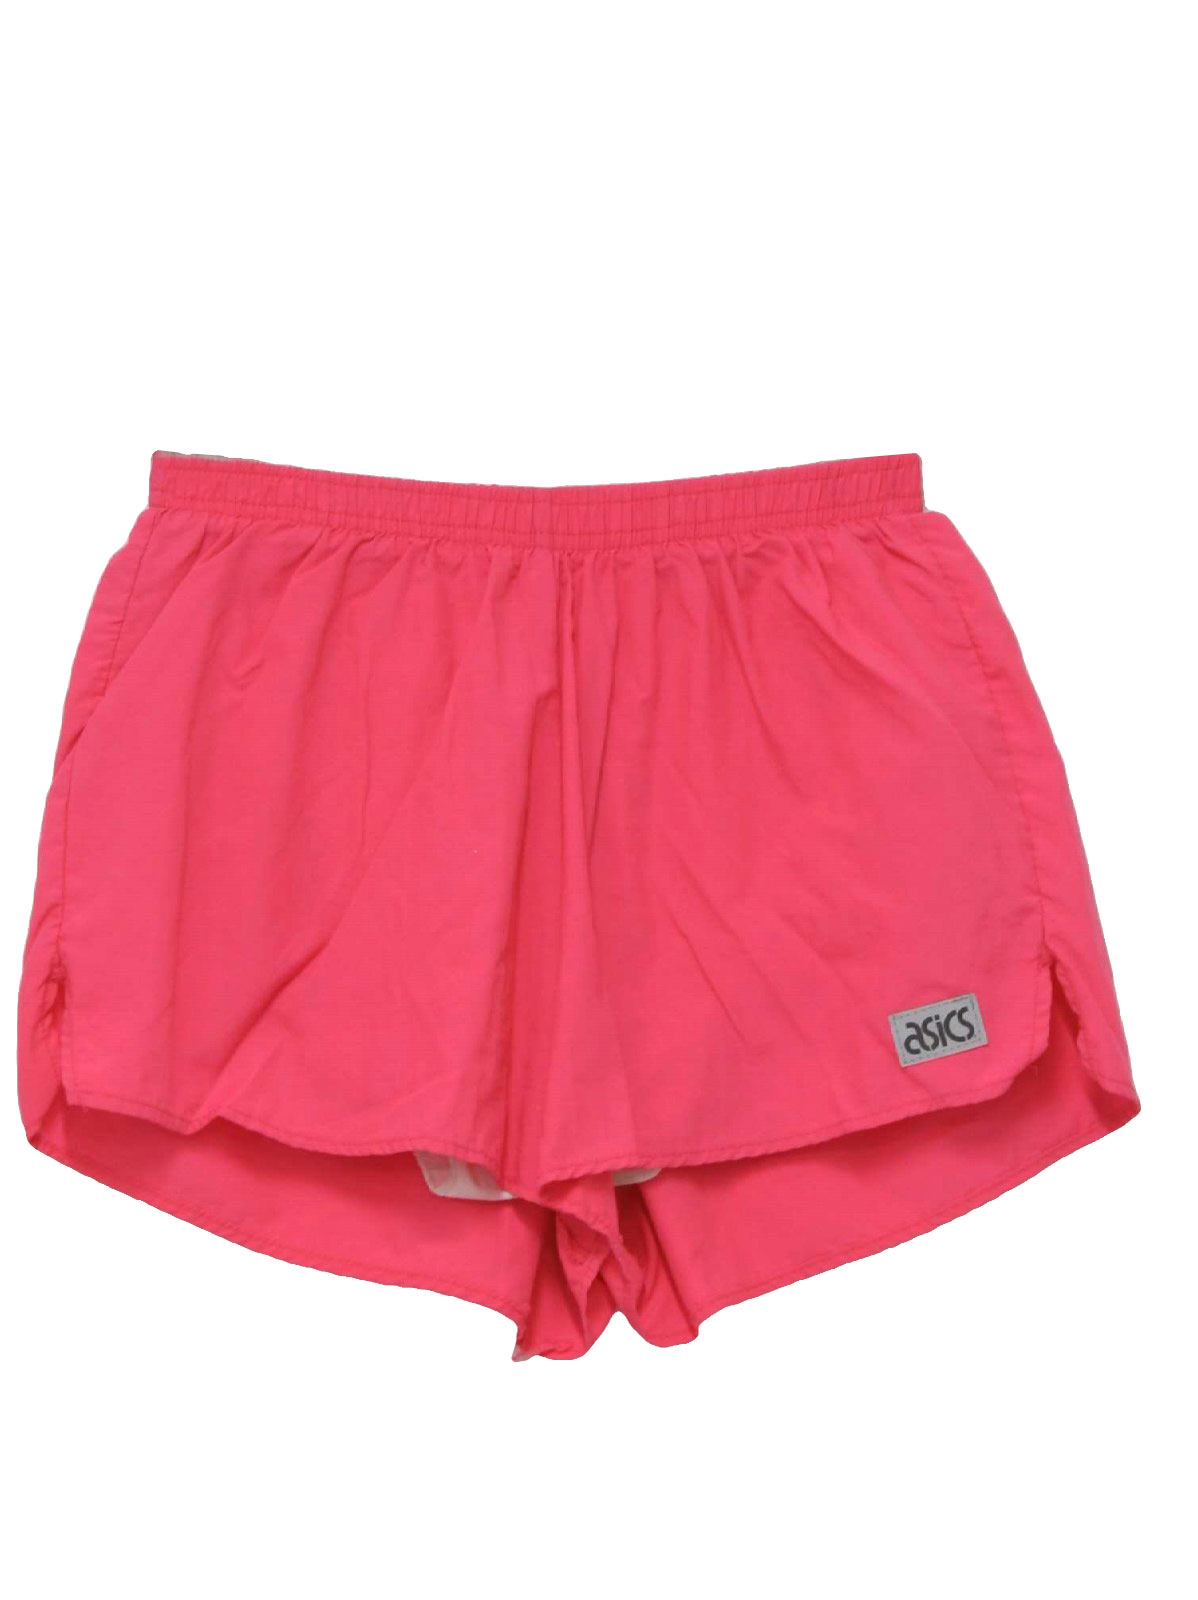 Asics 1980s Vintage Shorts: 80s -Asics- Mens hot pink nylon blend ...